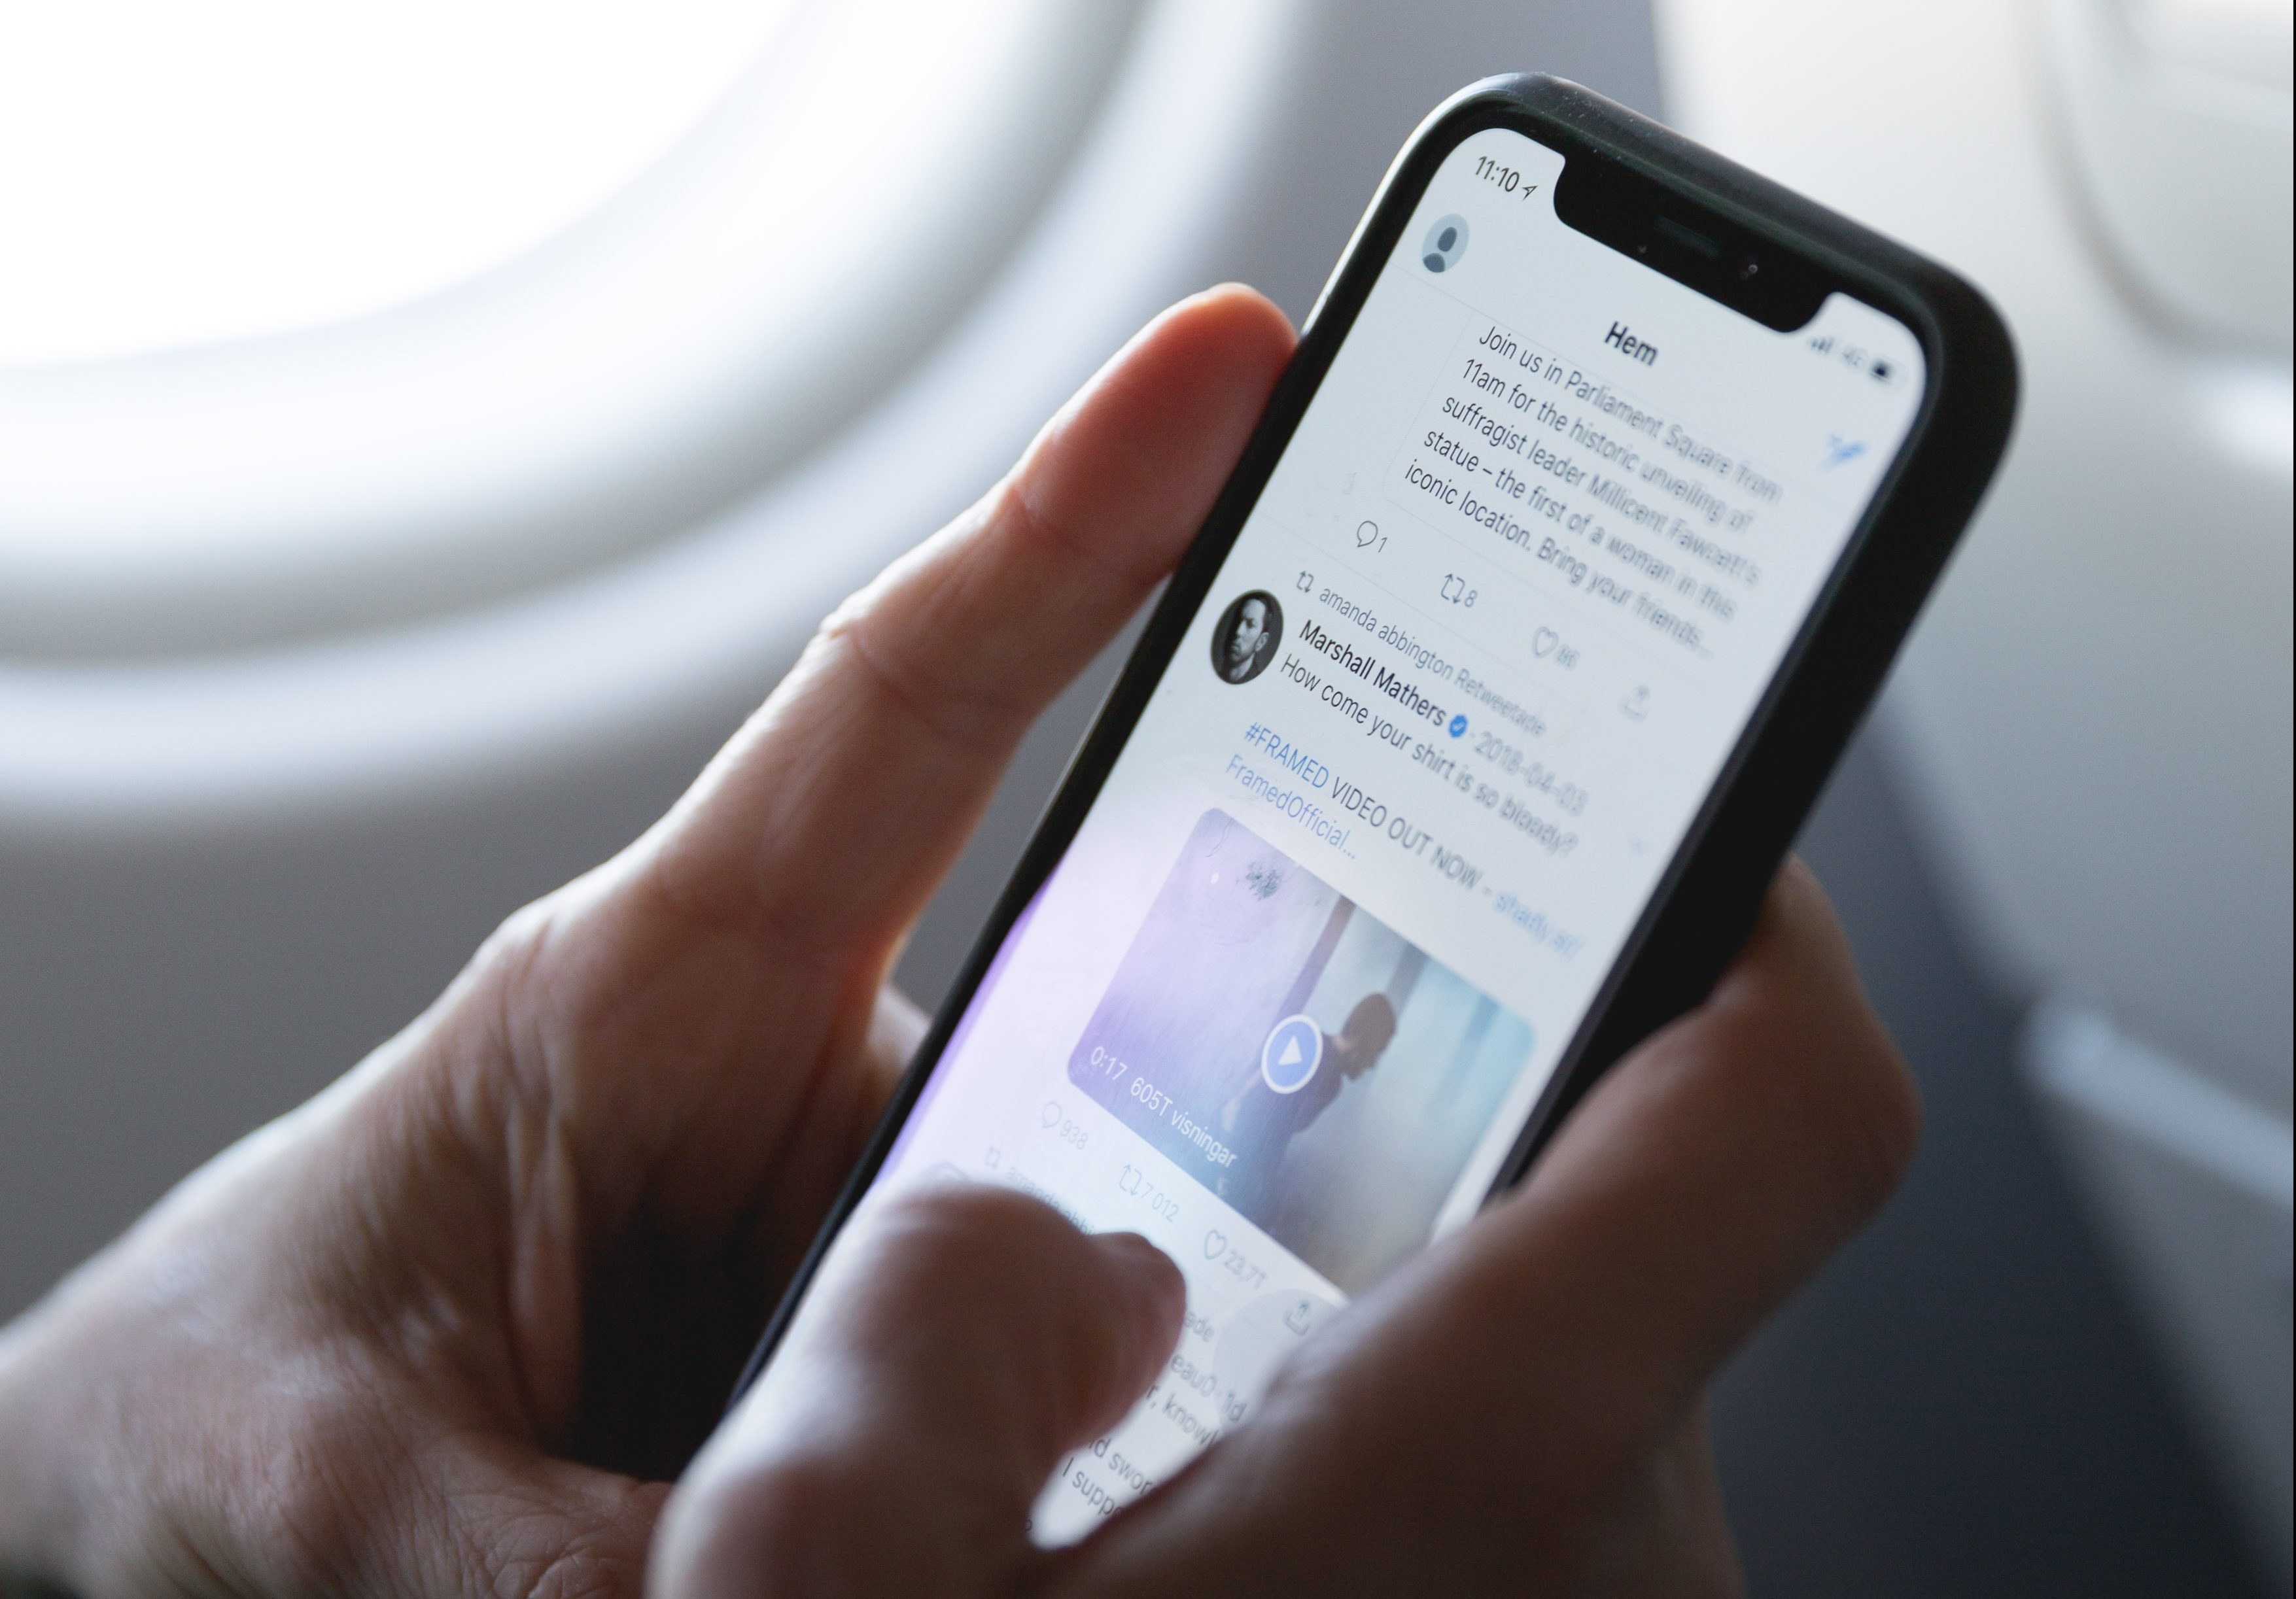 Twitter prepara Birdwatch para combater fake news em tweets